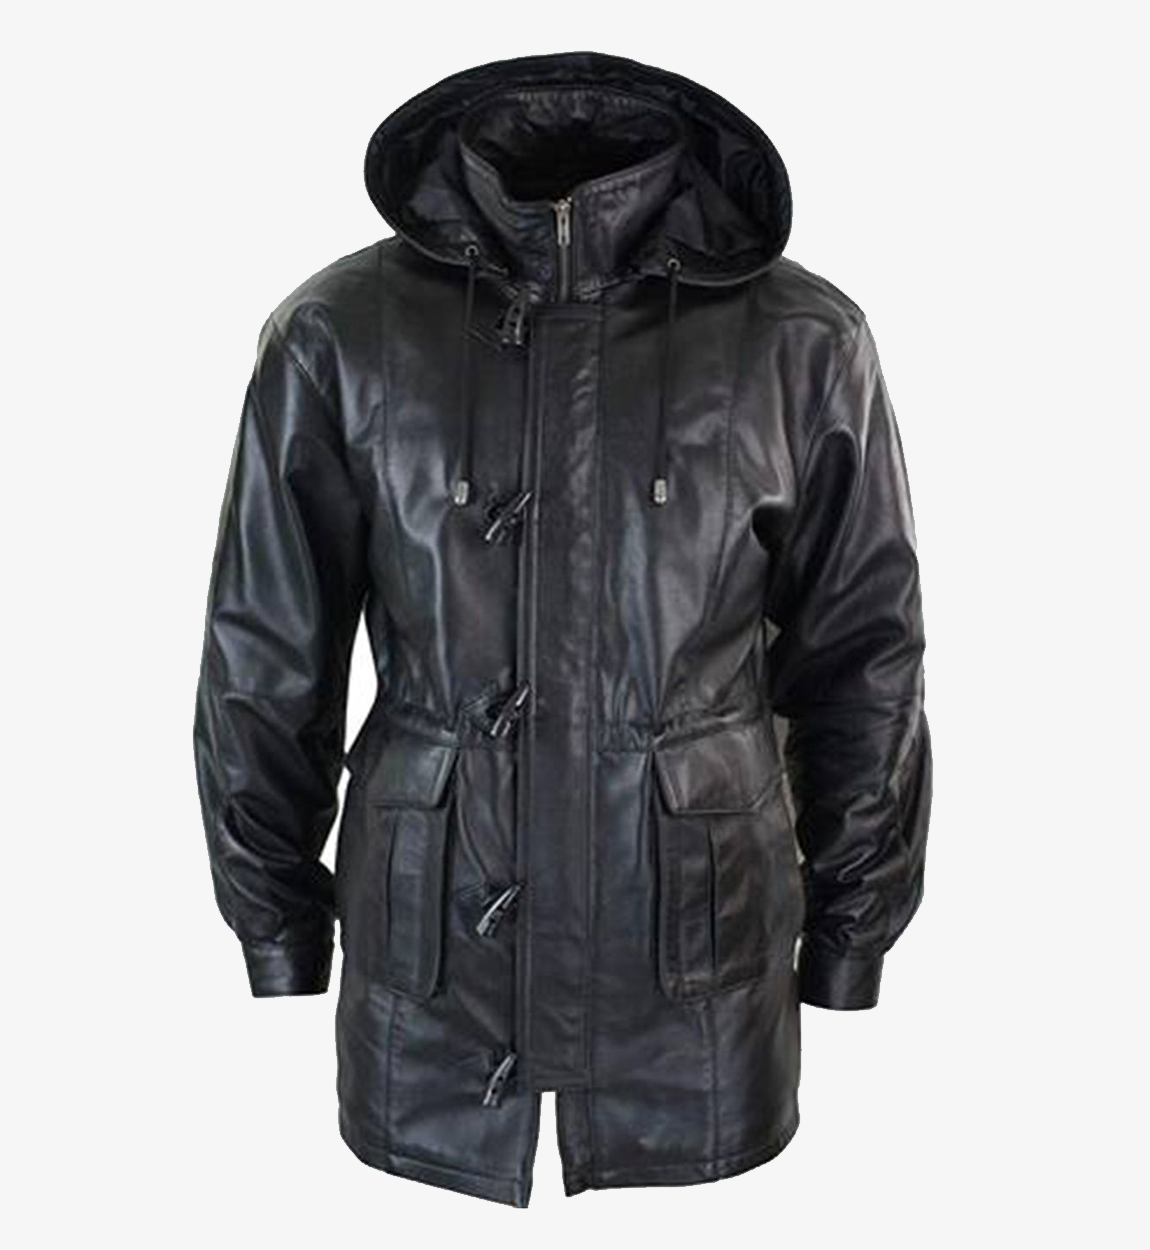 Men's 3/4 Long Black Duffle Coat With Detachable Hood